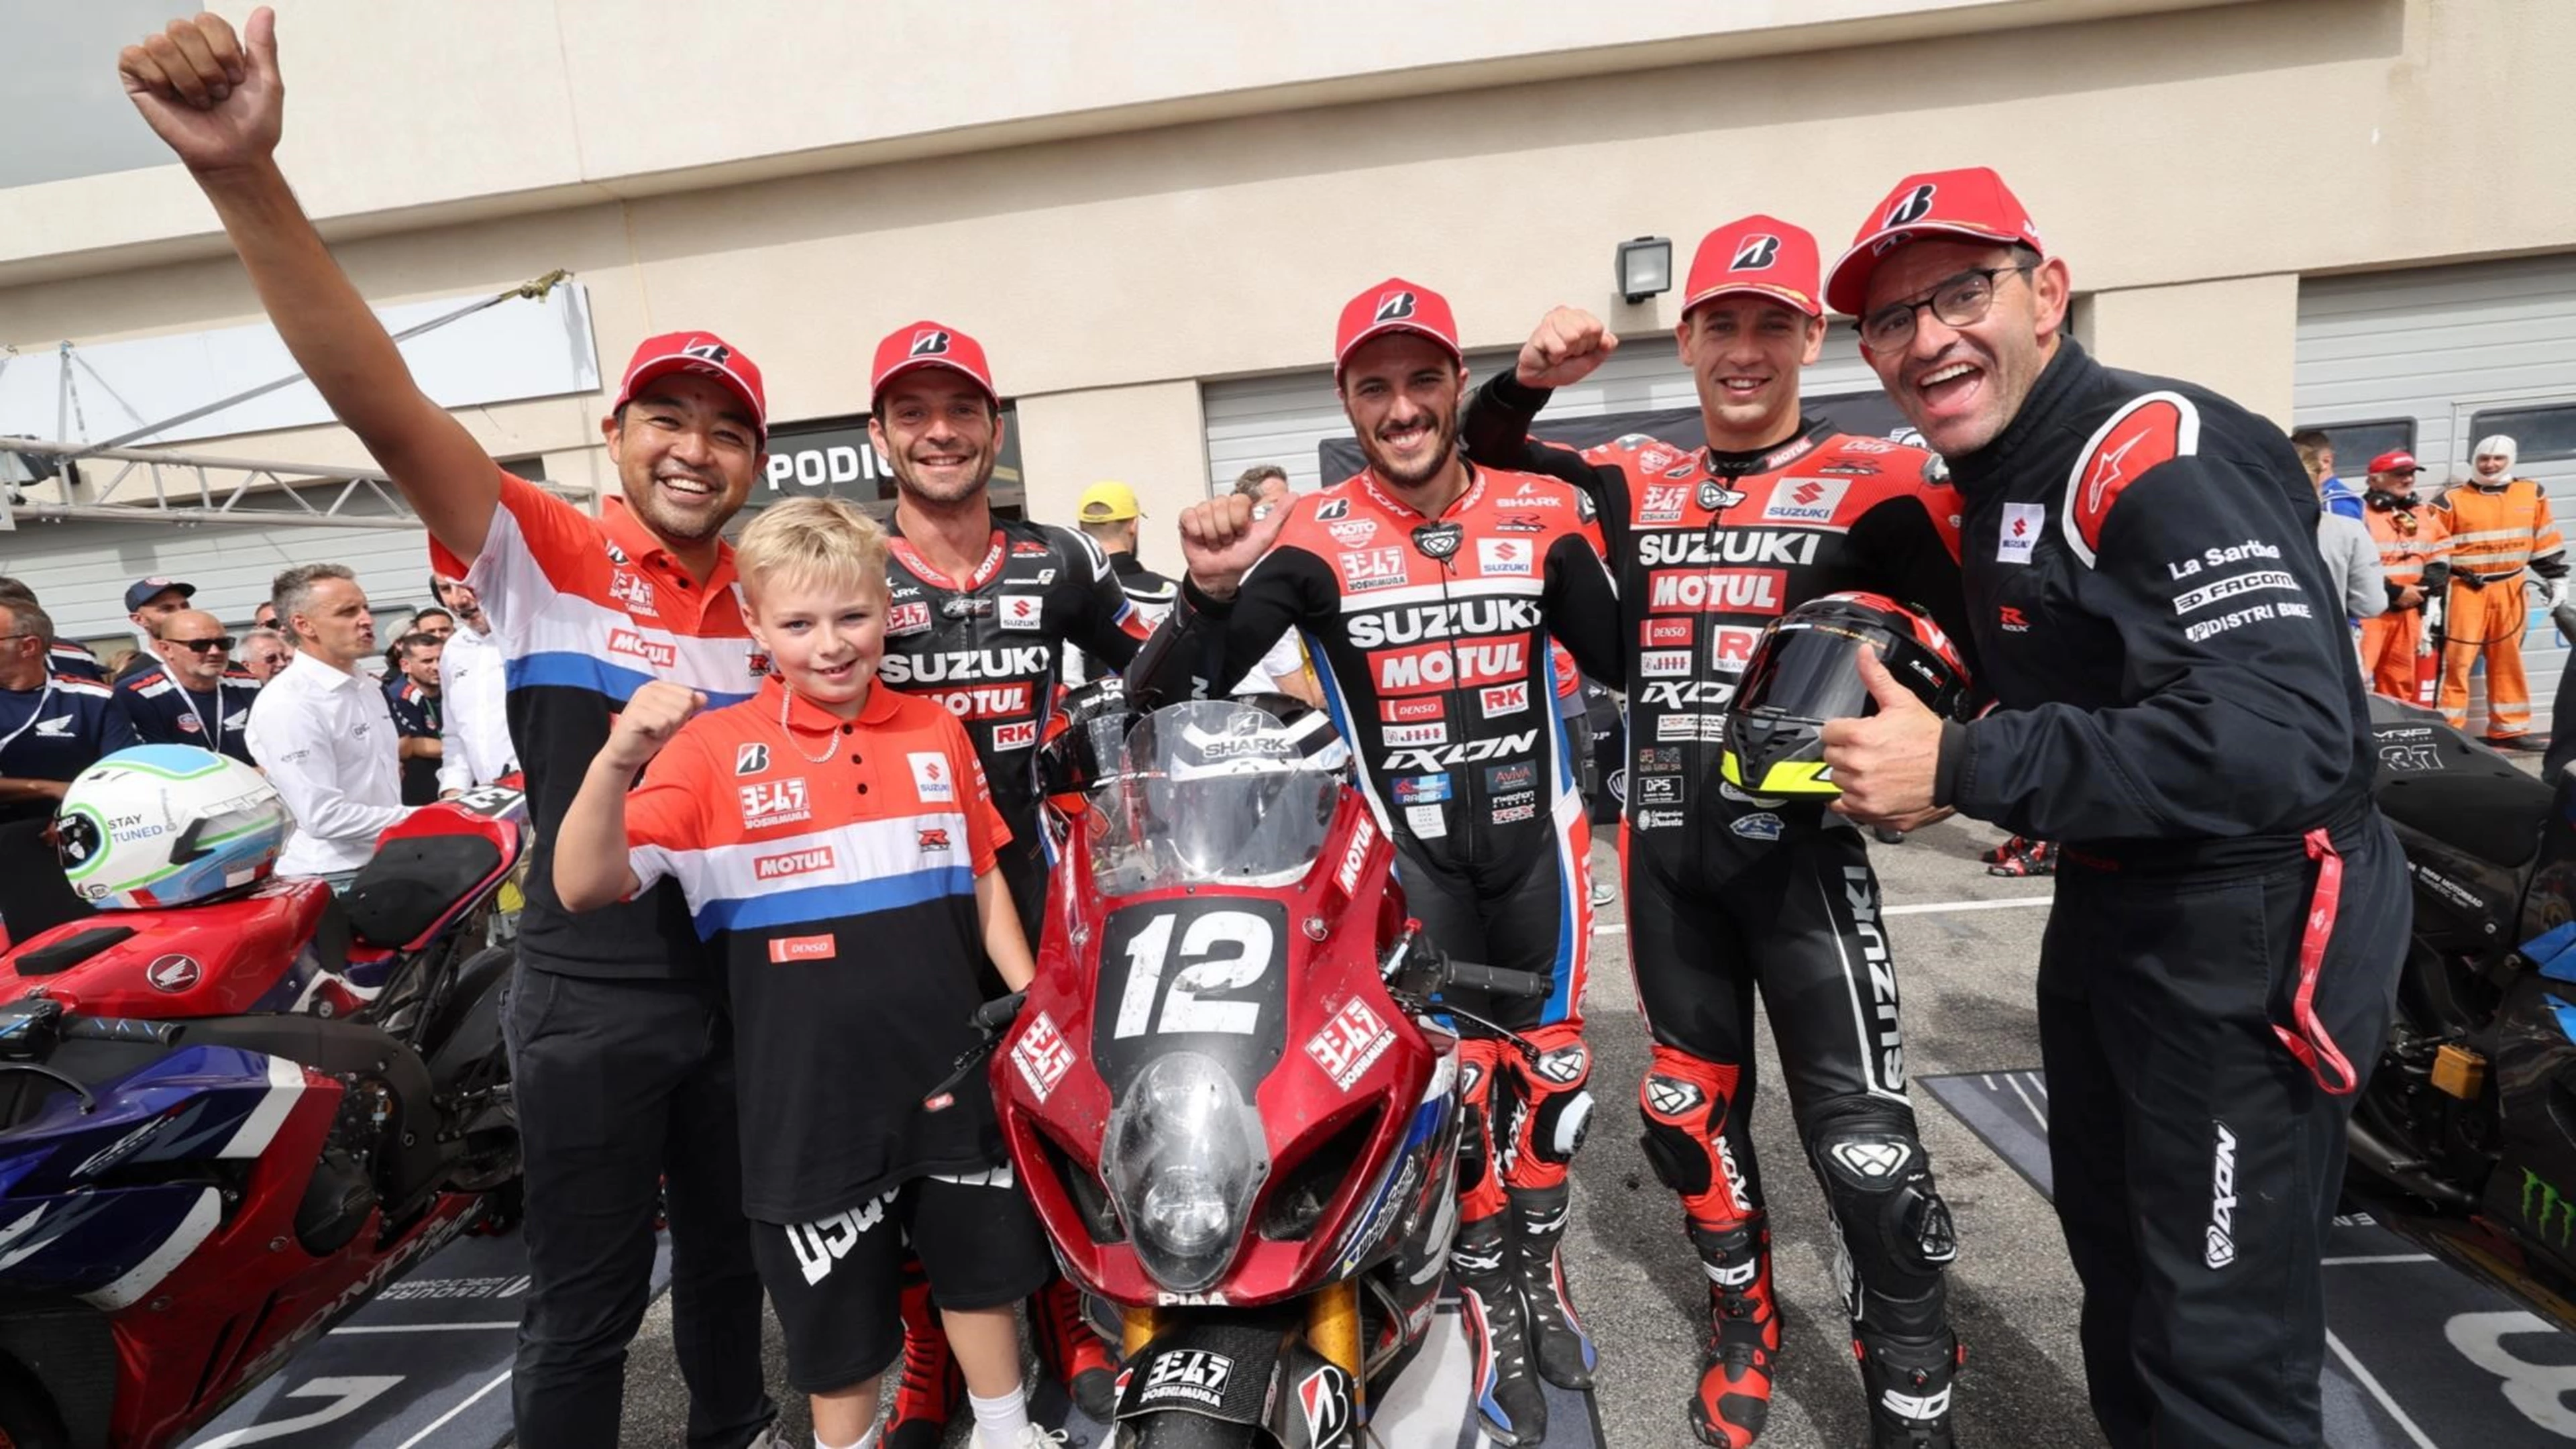 SERT team celebrate motorcycle race win